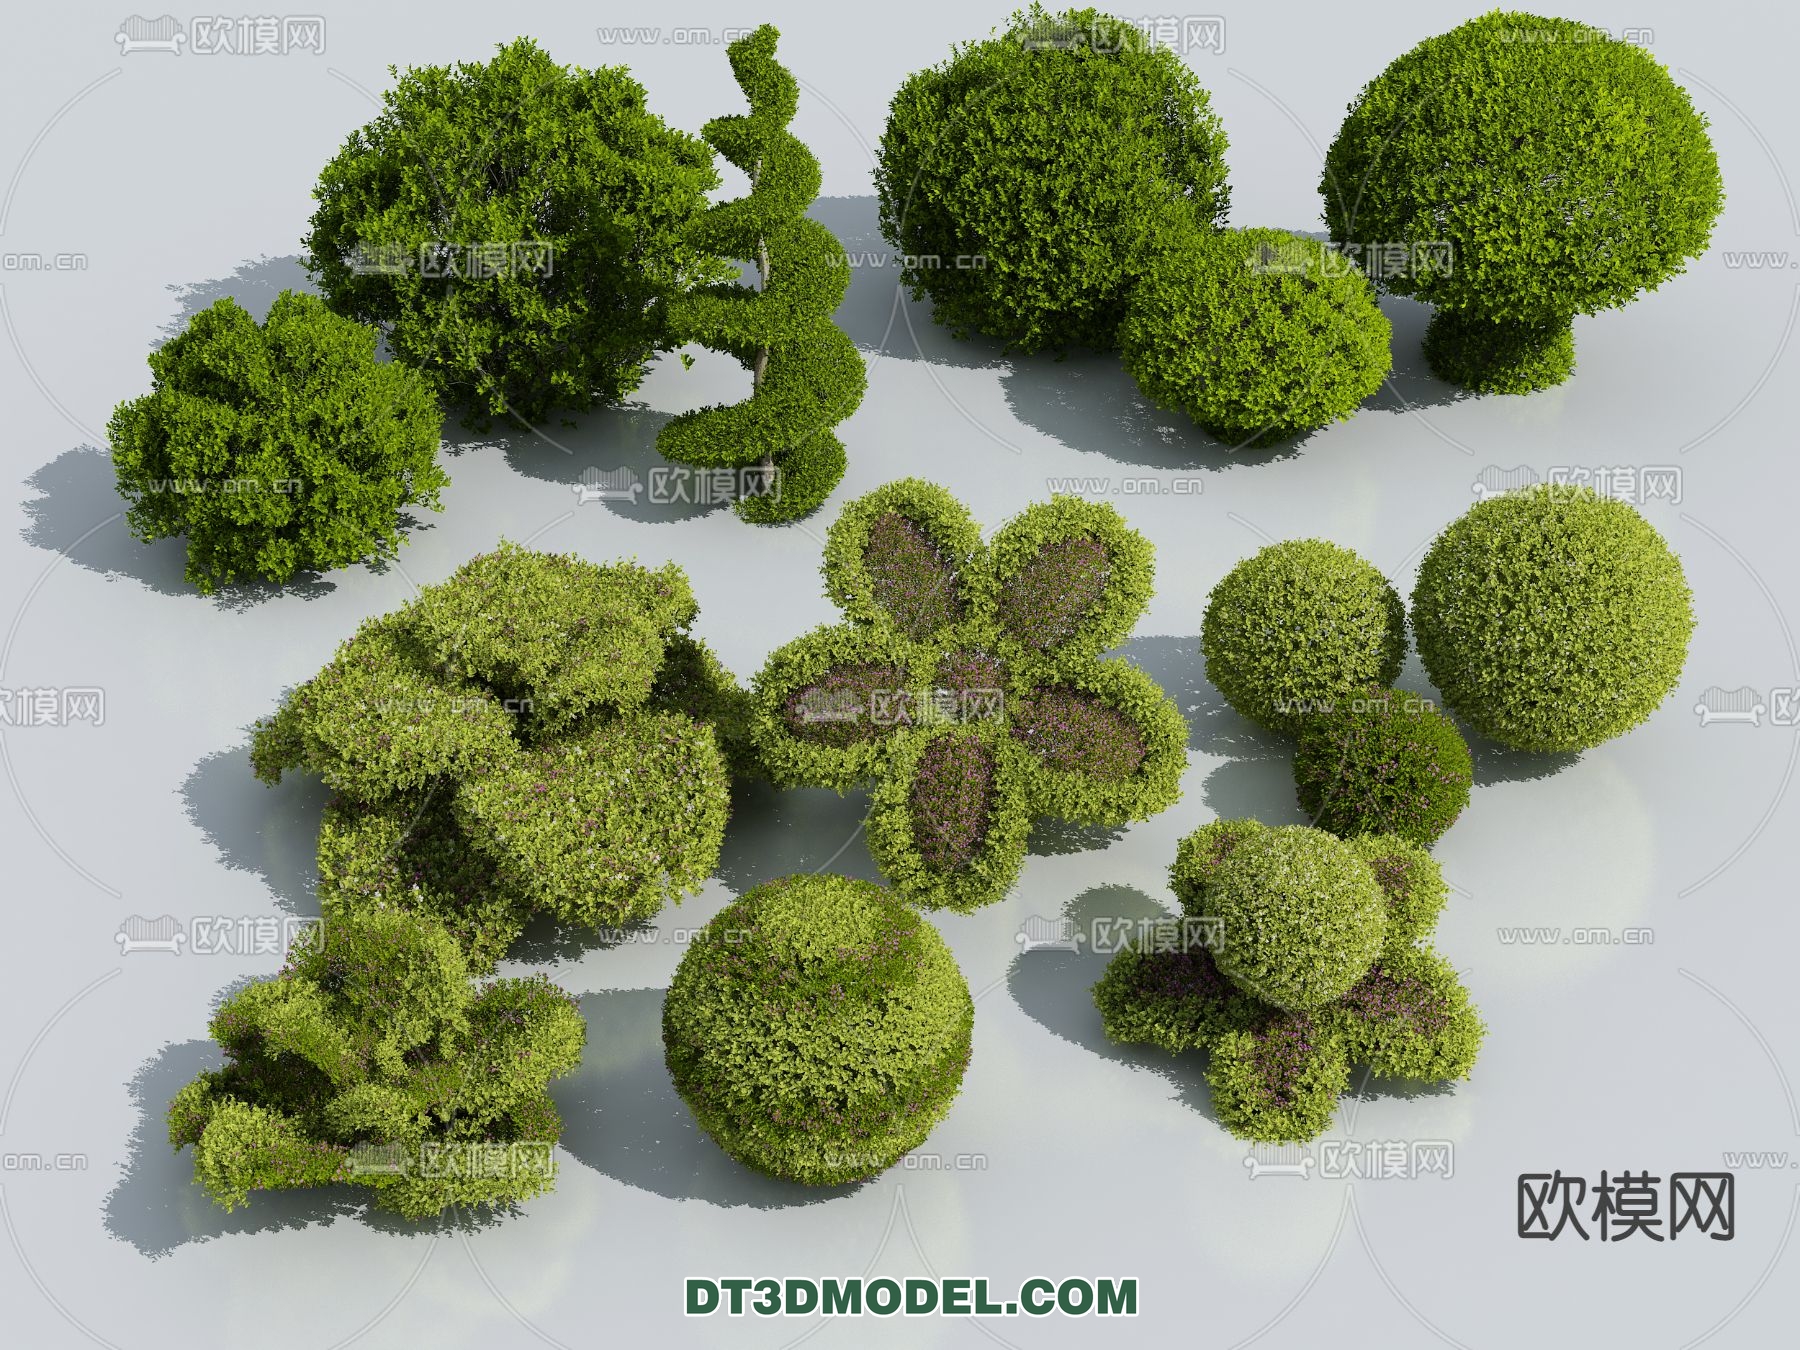 PLANTS – BUSH – VRAY / CORONA – 3D MODEL – 305 - thumbnail 1